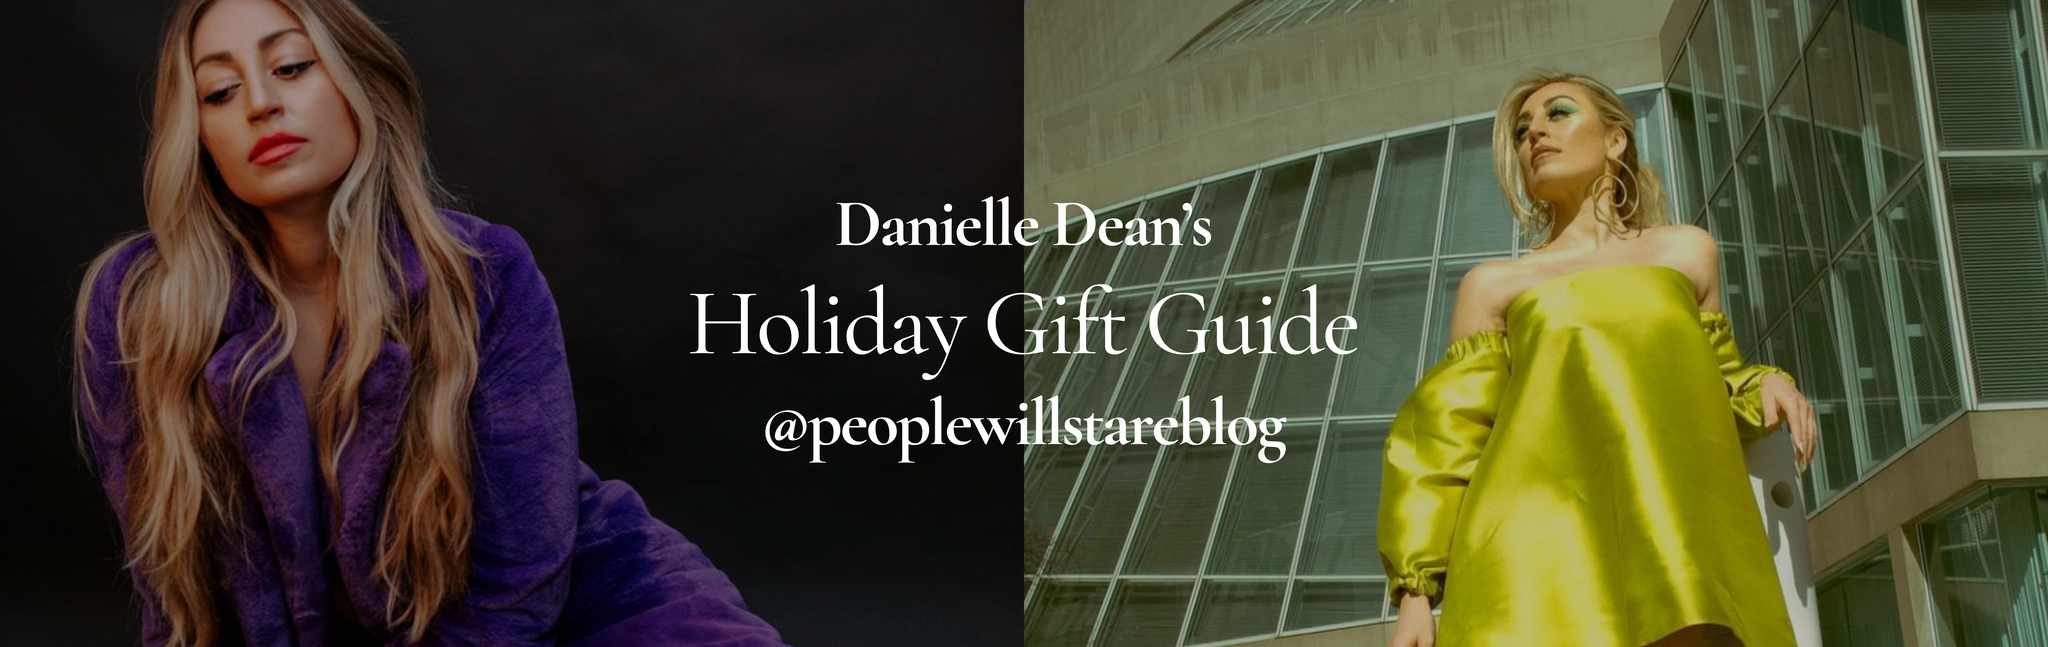 Danielle Dean (@peoplewillstareblog)